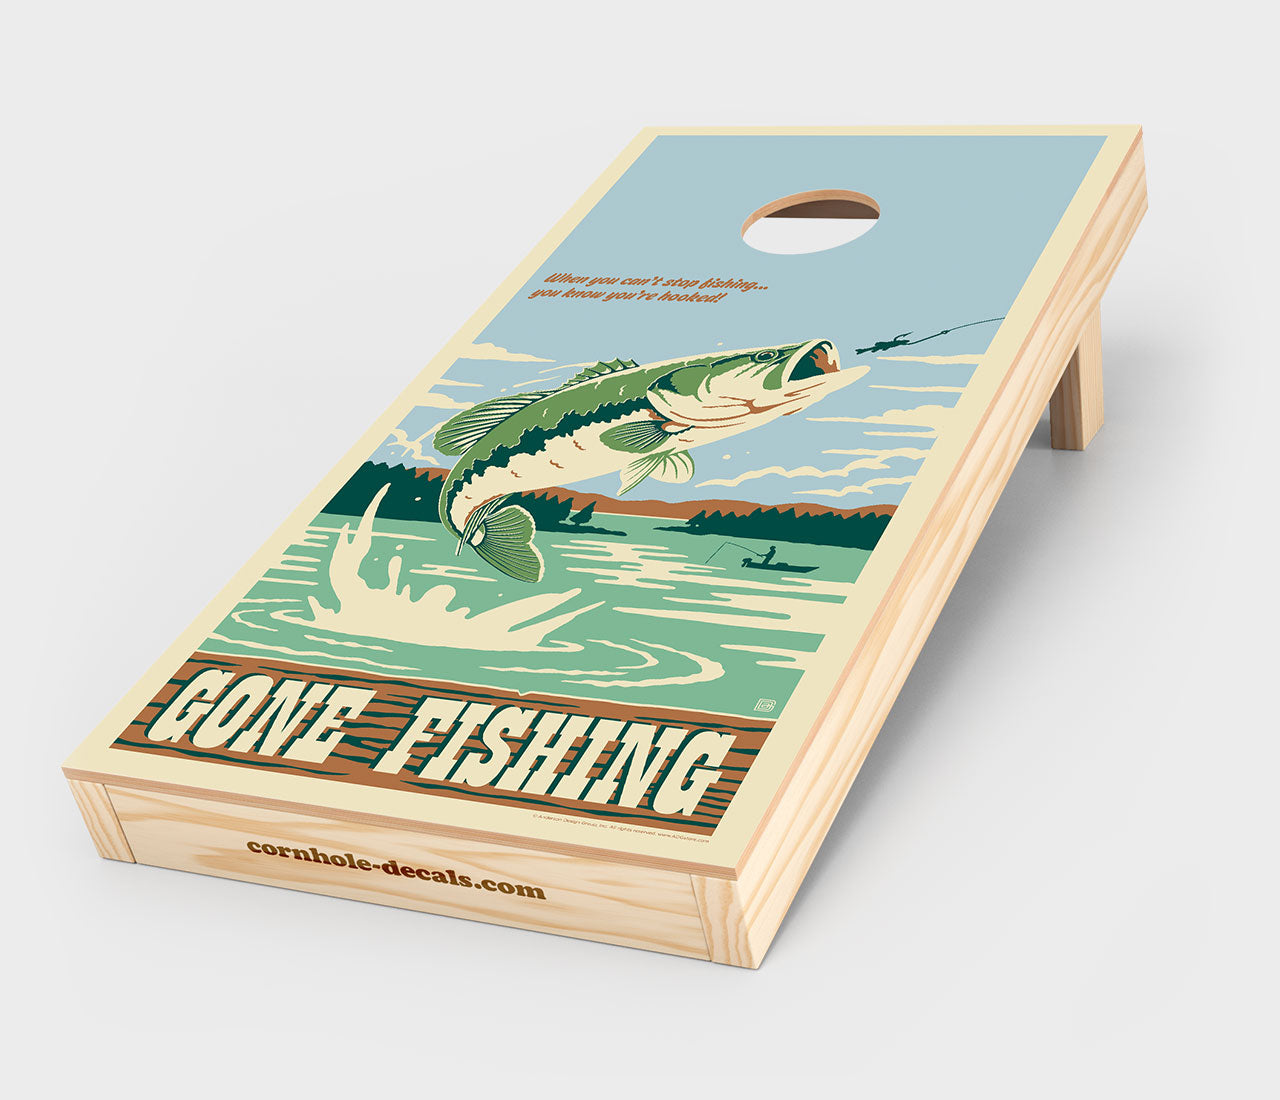 Gone Fishing Cornhole Wrap Design